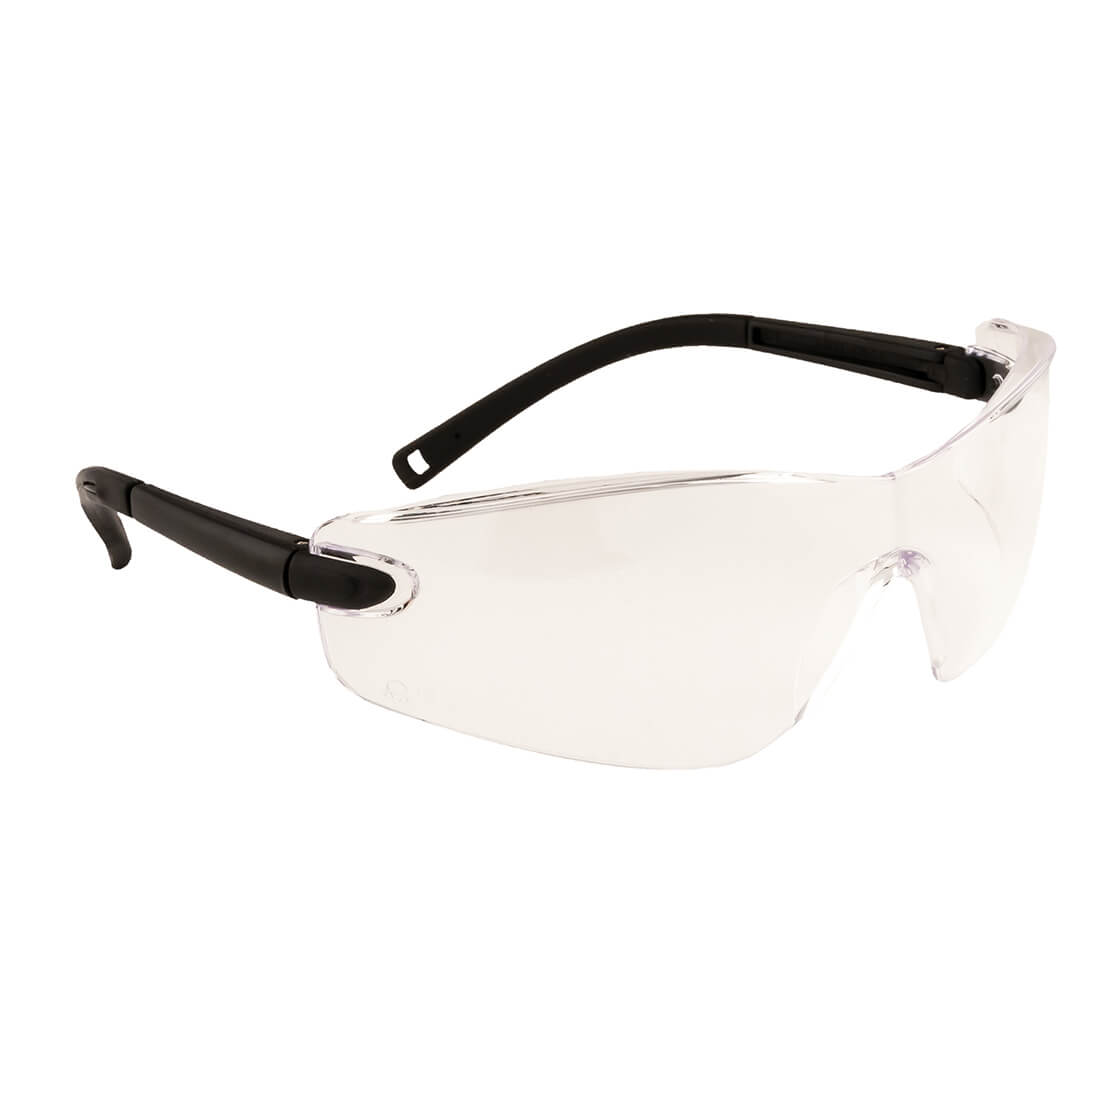 Image of Portwest Profile Safety Glasses Black Clear